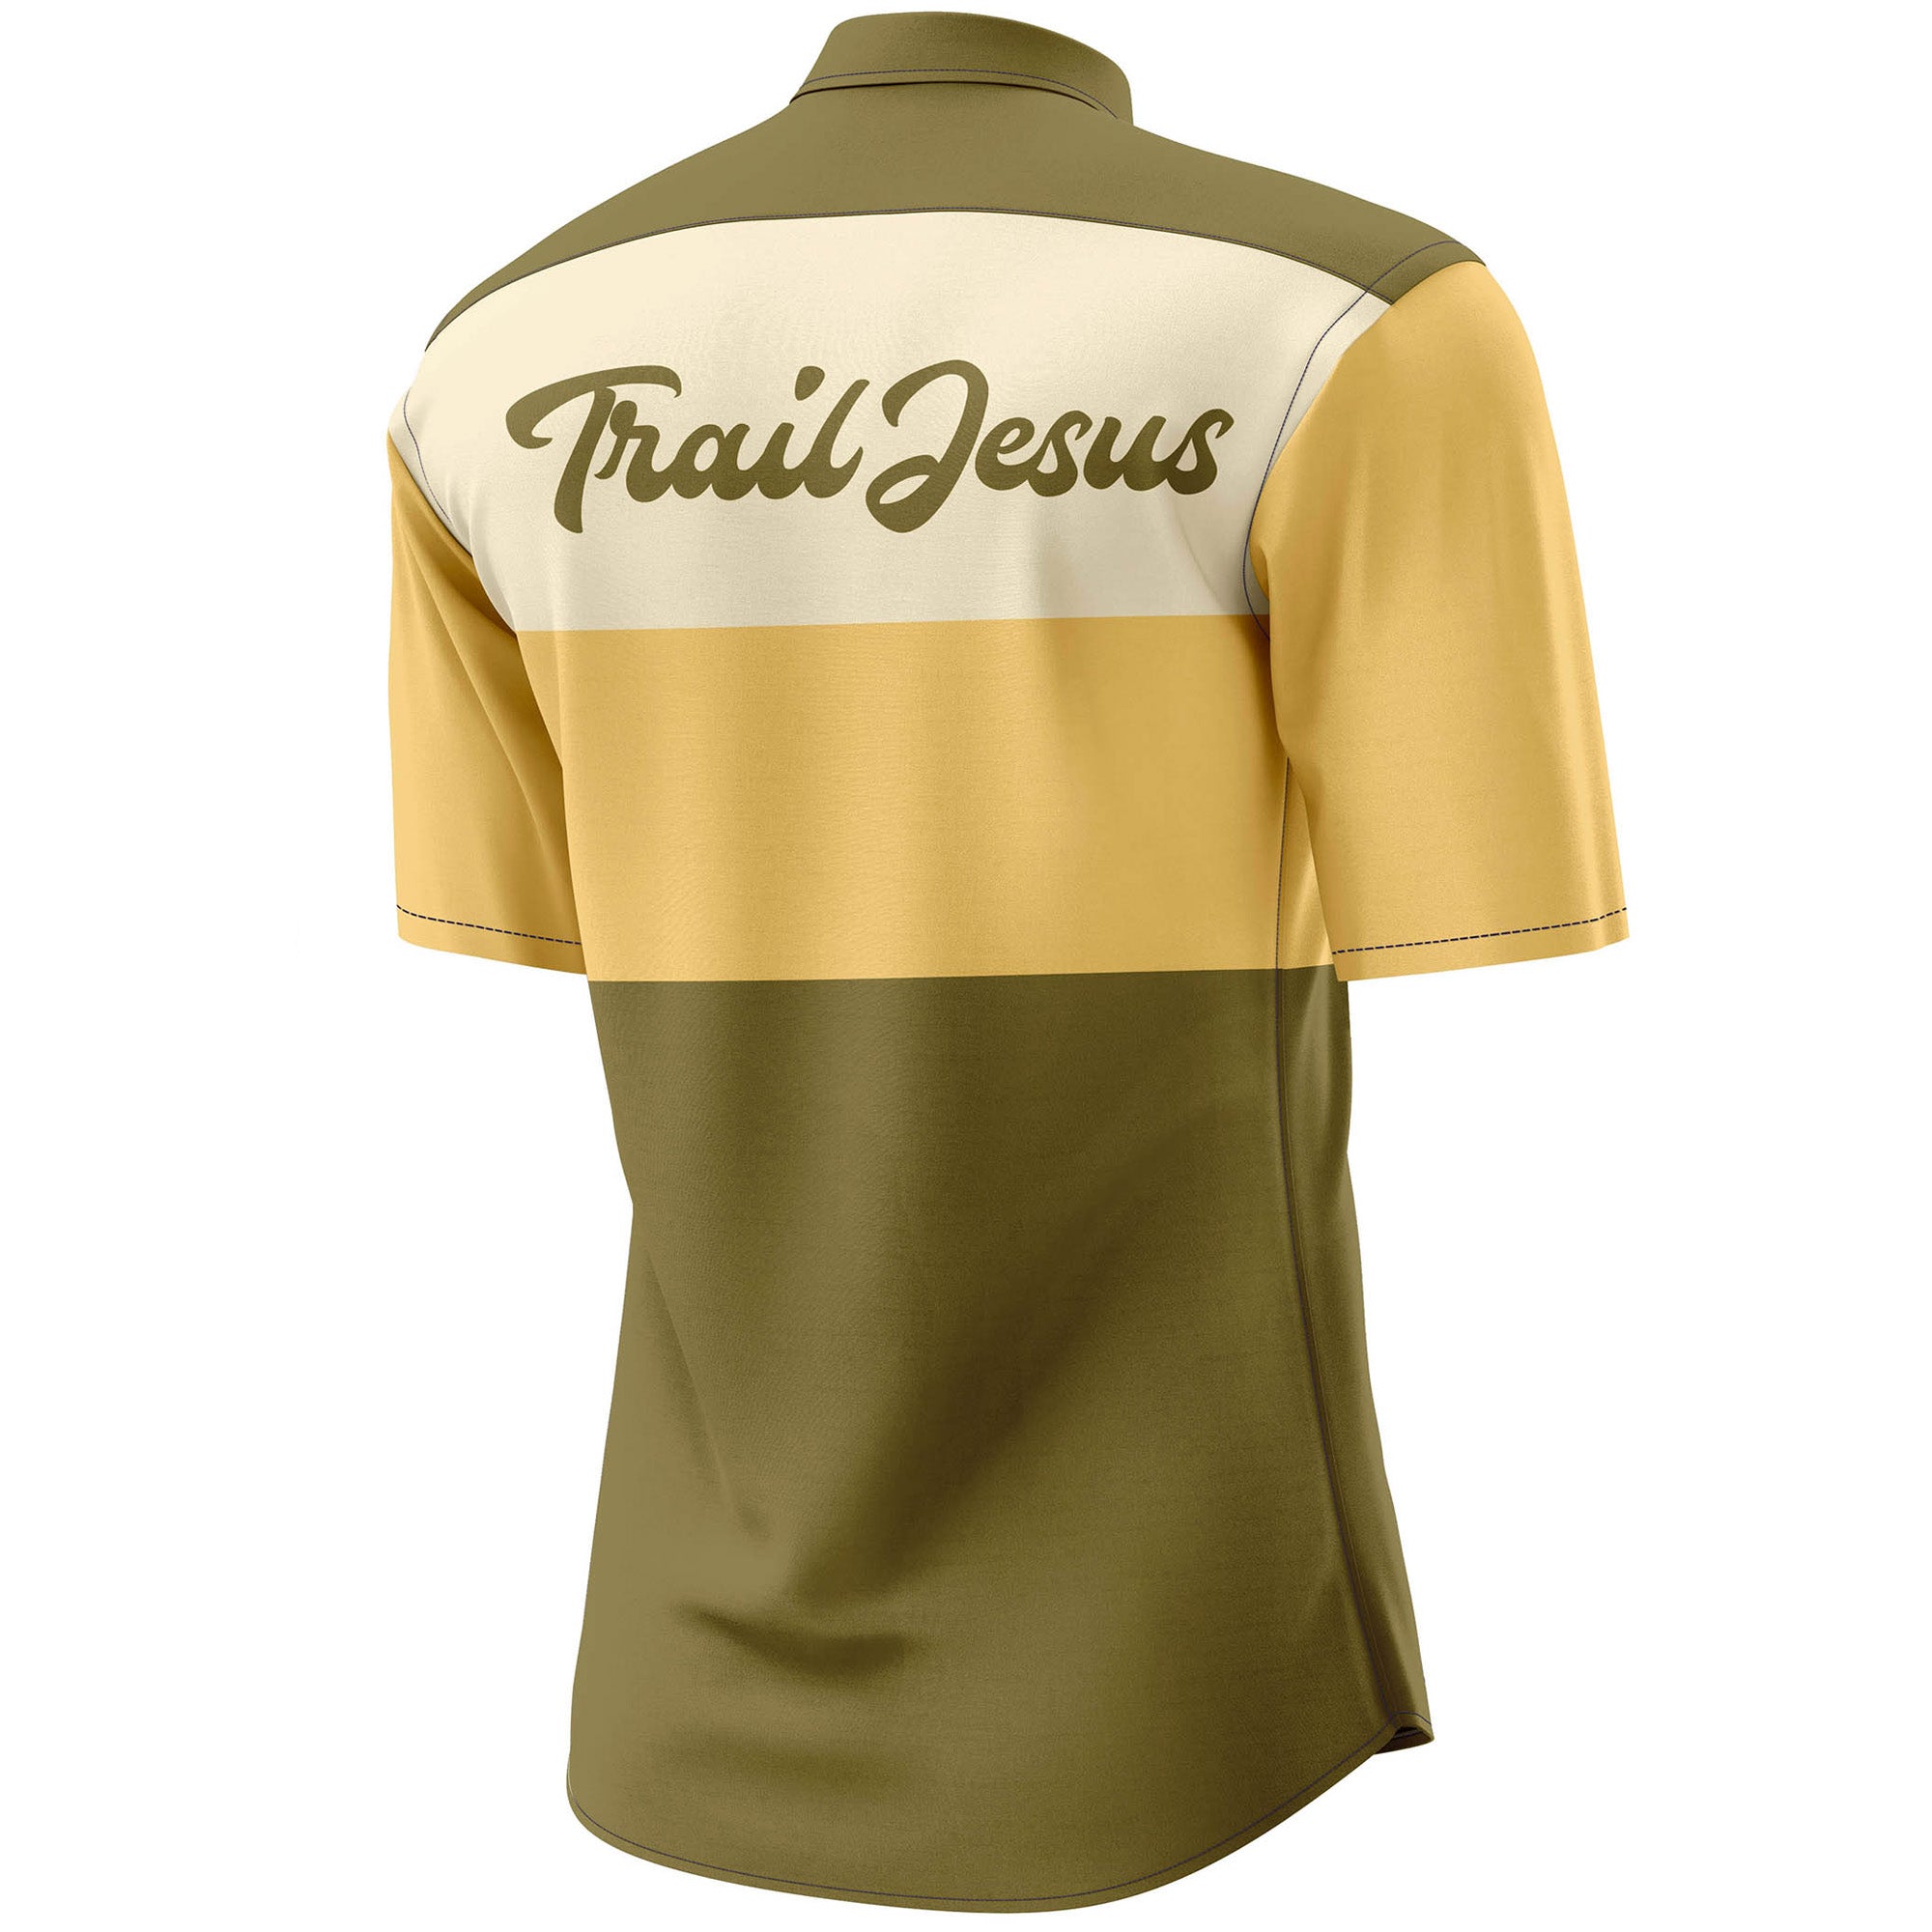 TRAIL JESUS Ride Shirt